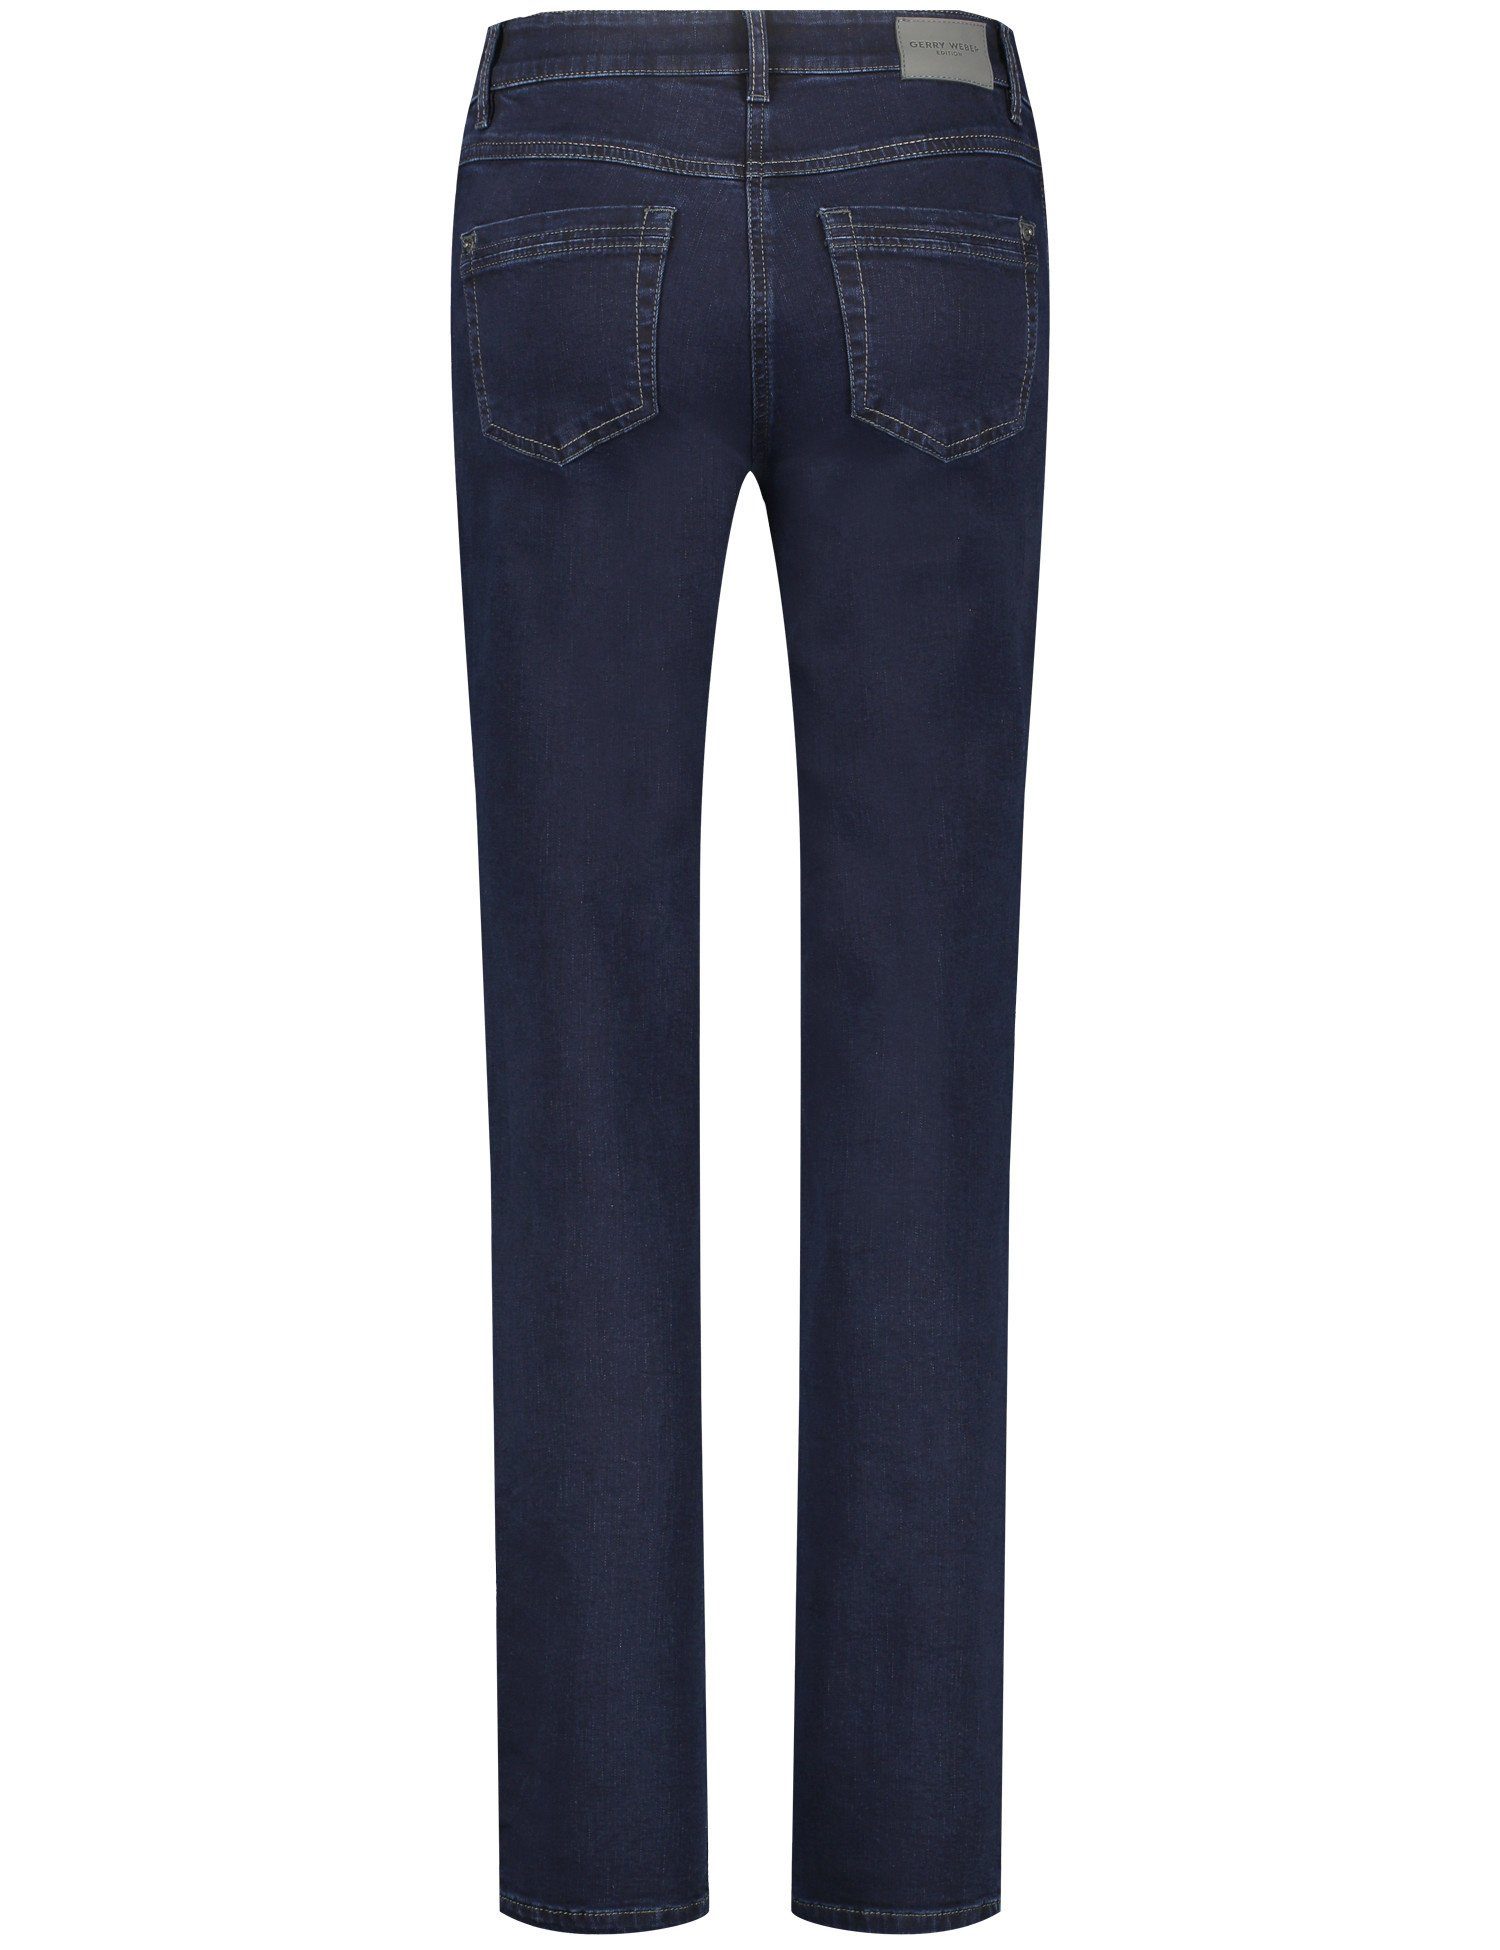 GERRY WEBER Stretch-Jeans 5-Pocket Denim Fit Blue Jeans Dark Straight